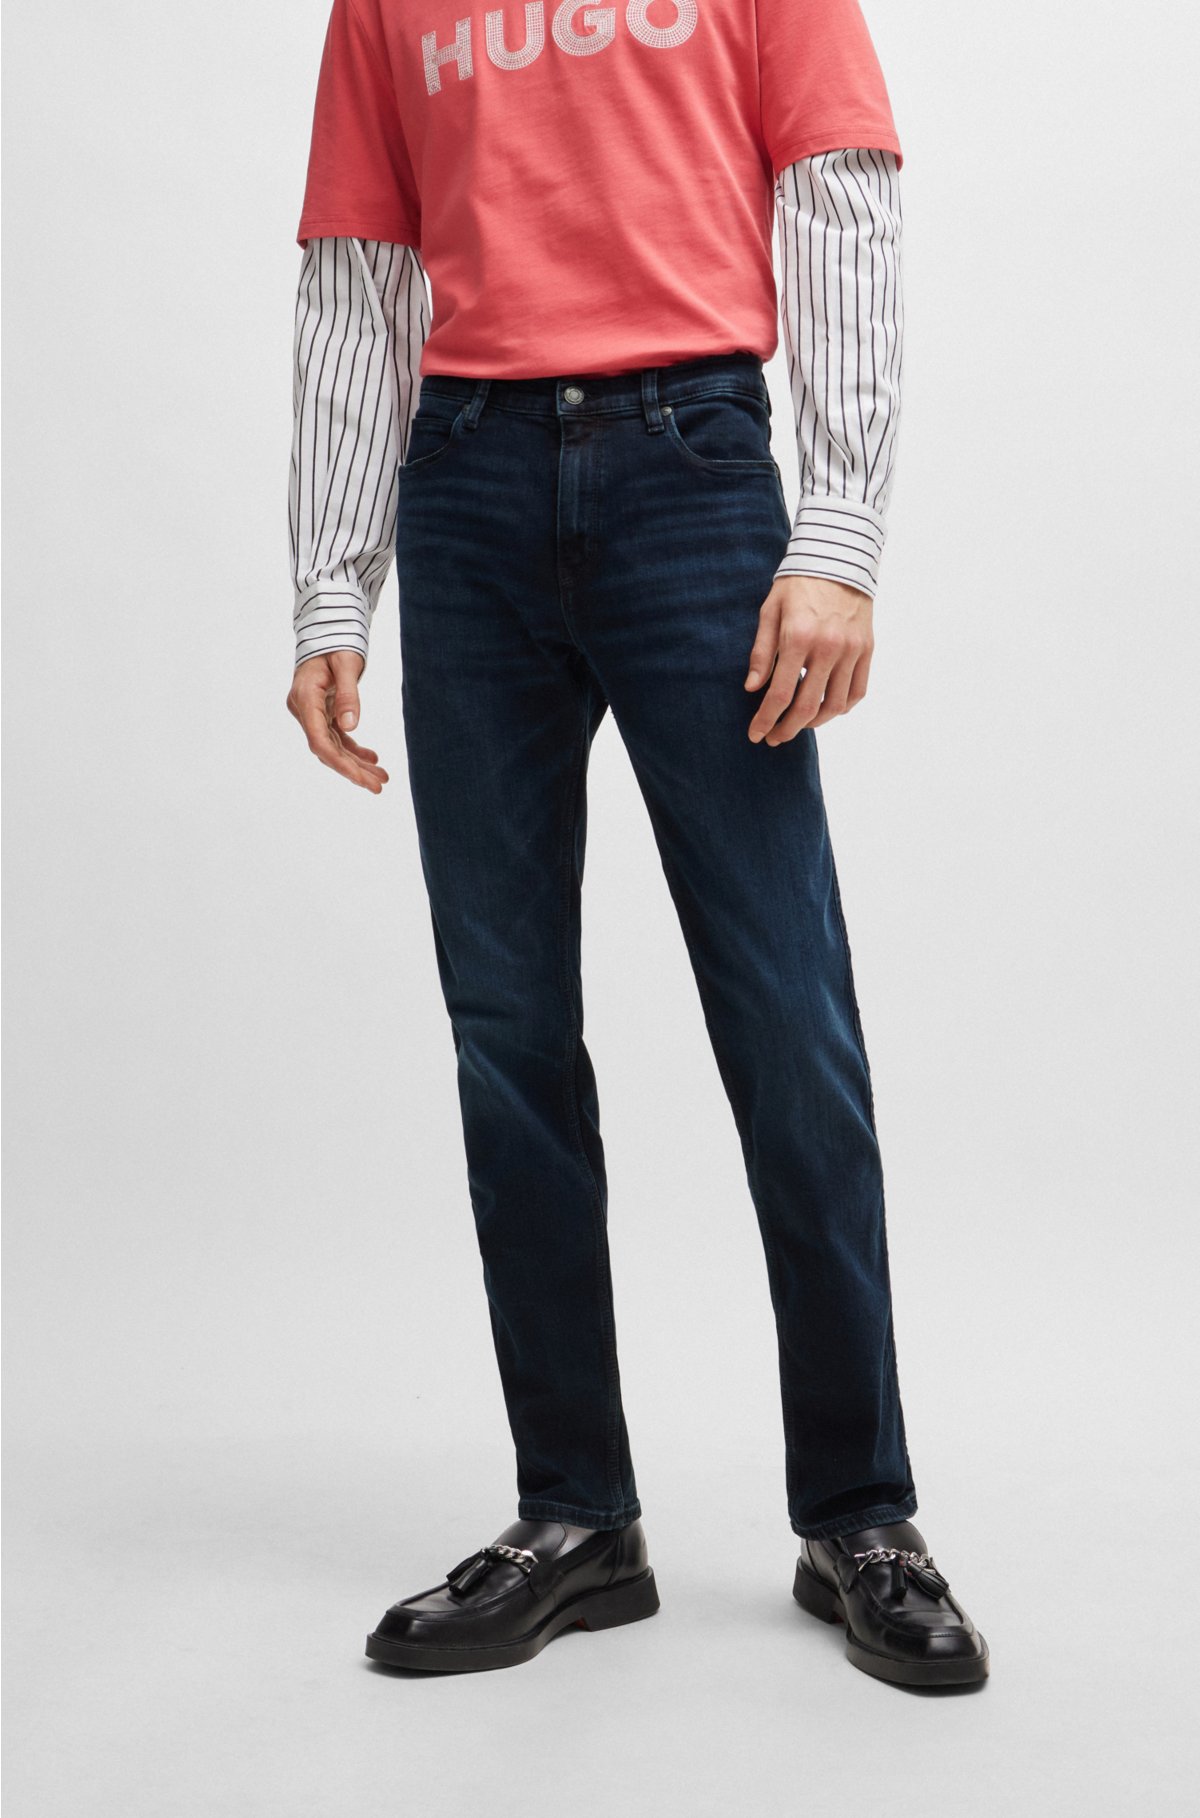 stopcontact spreker Continentaal HUGO - Slim-fit jeans in blue-black stretch denim